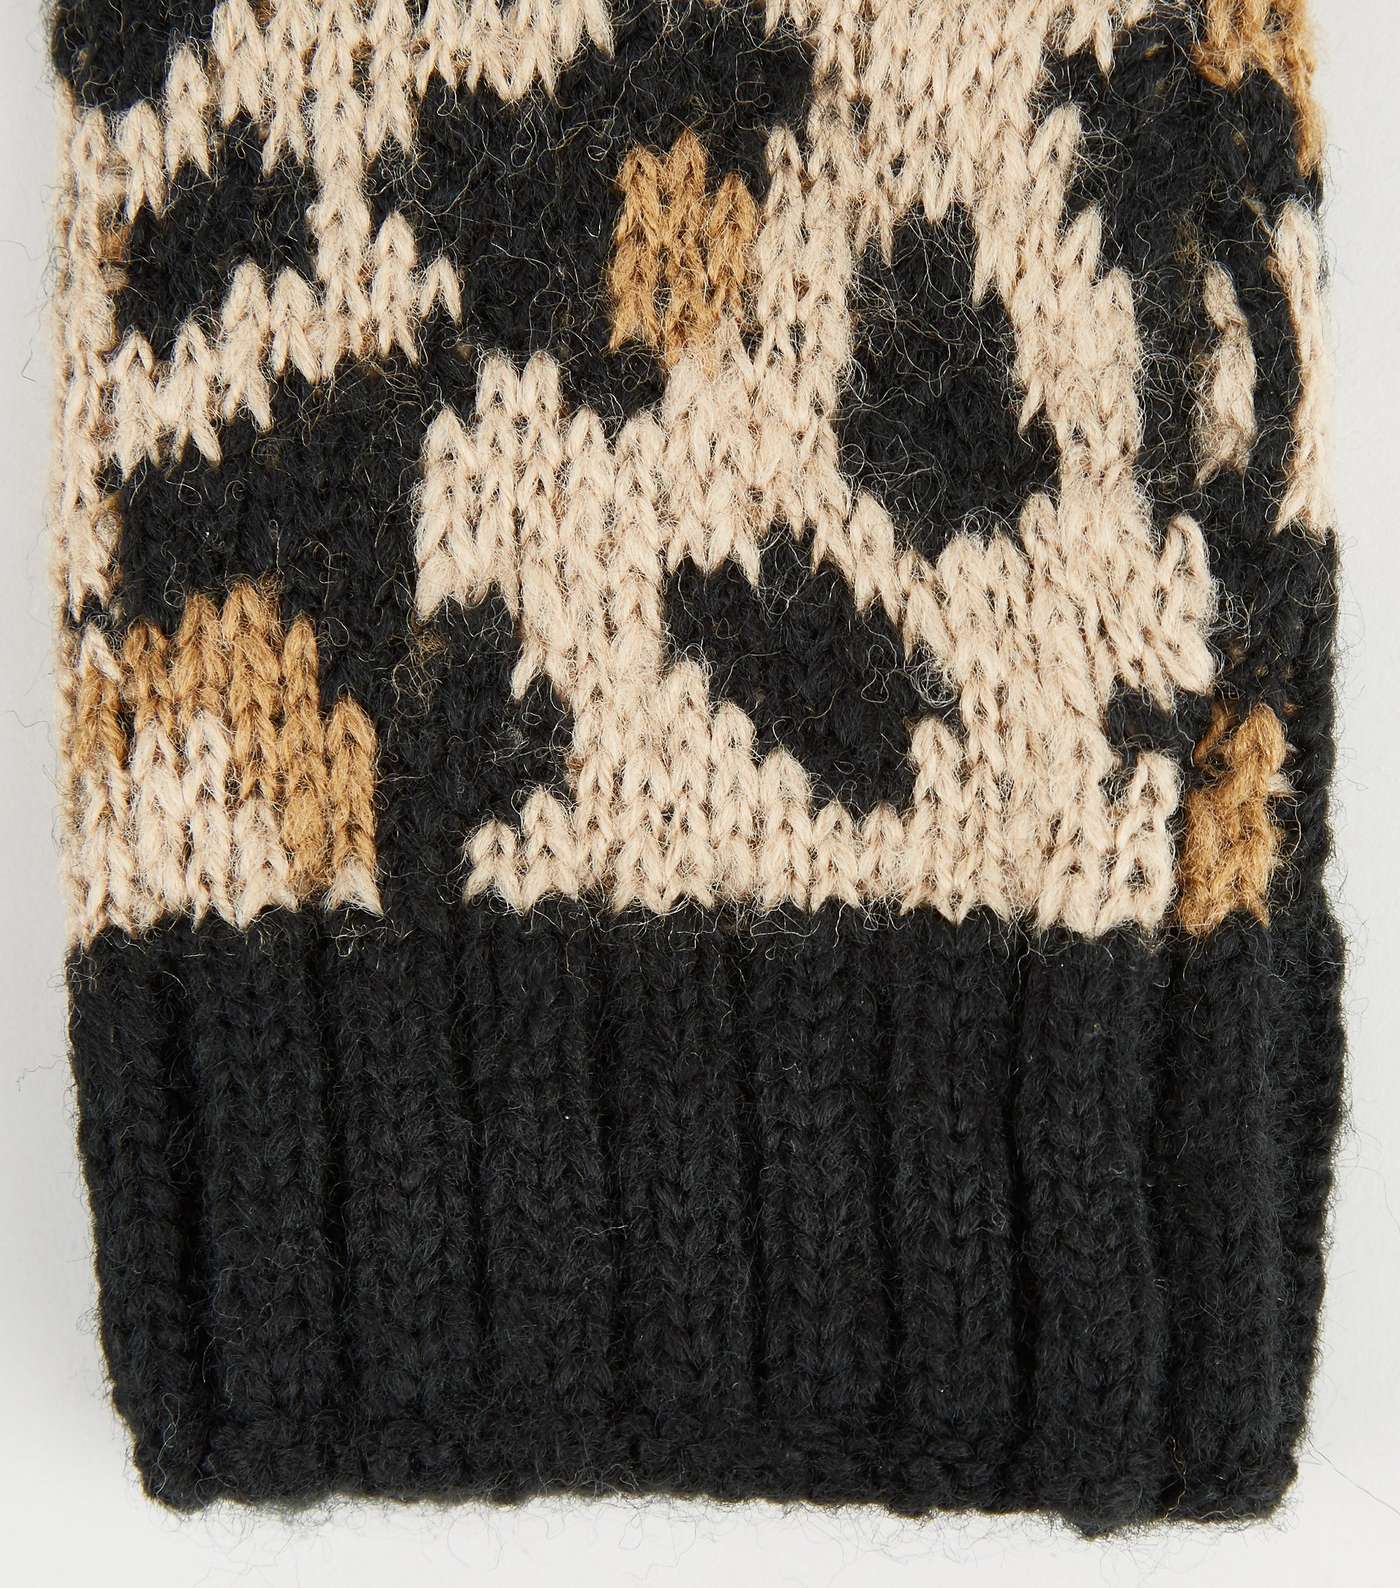 Brown Leopard Print Knit Arm Warmers Image 2